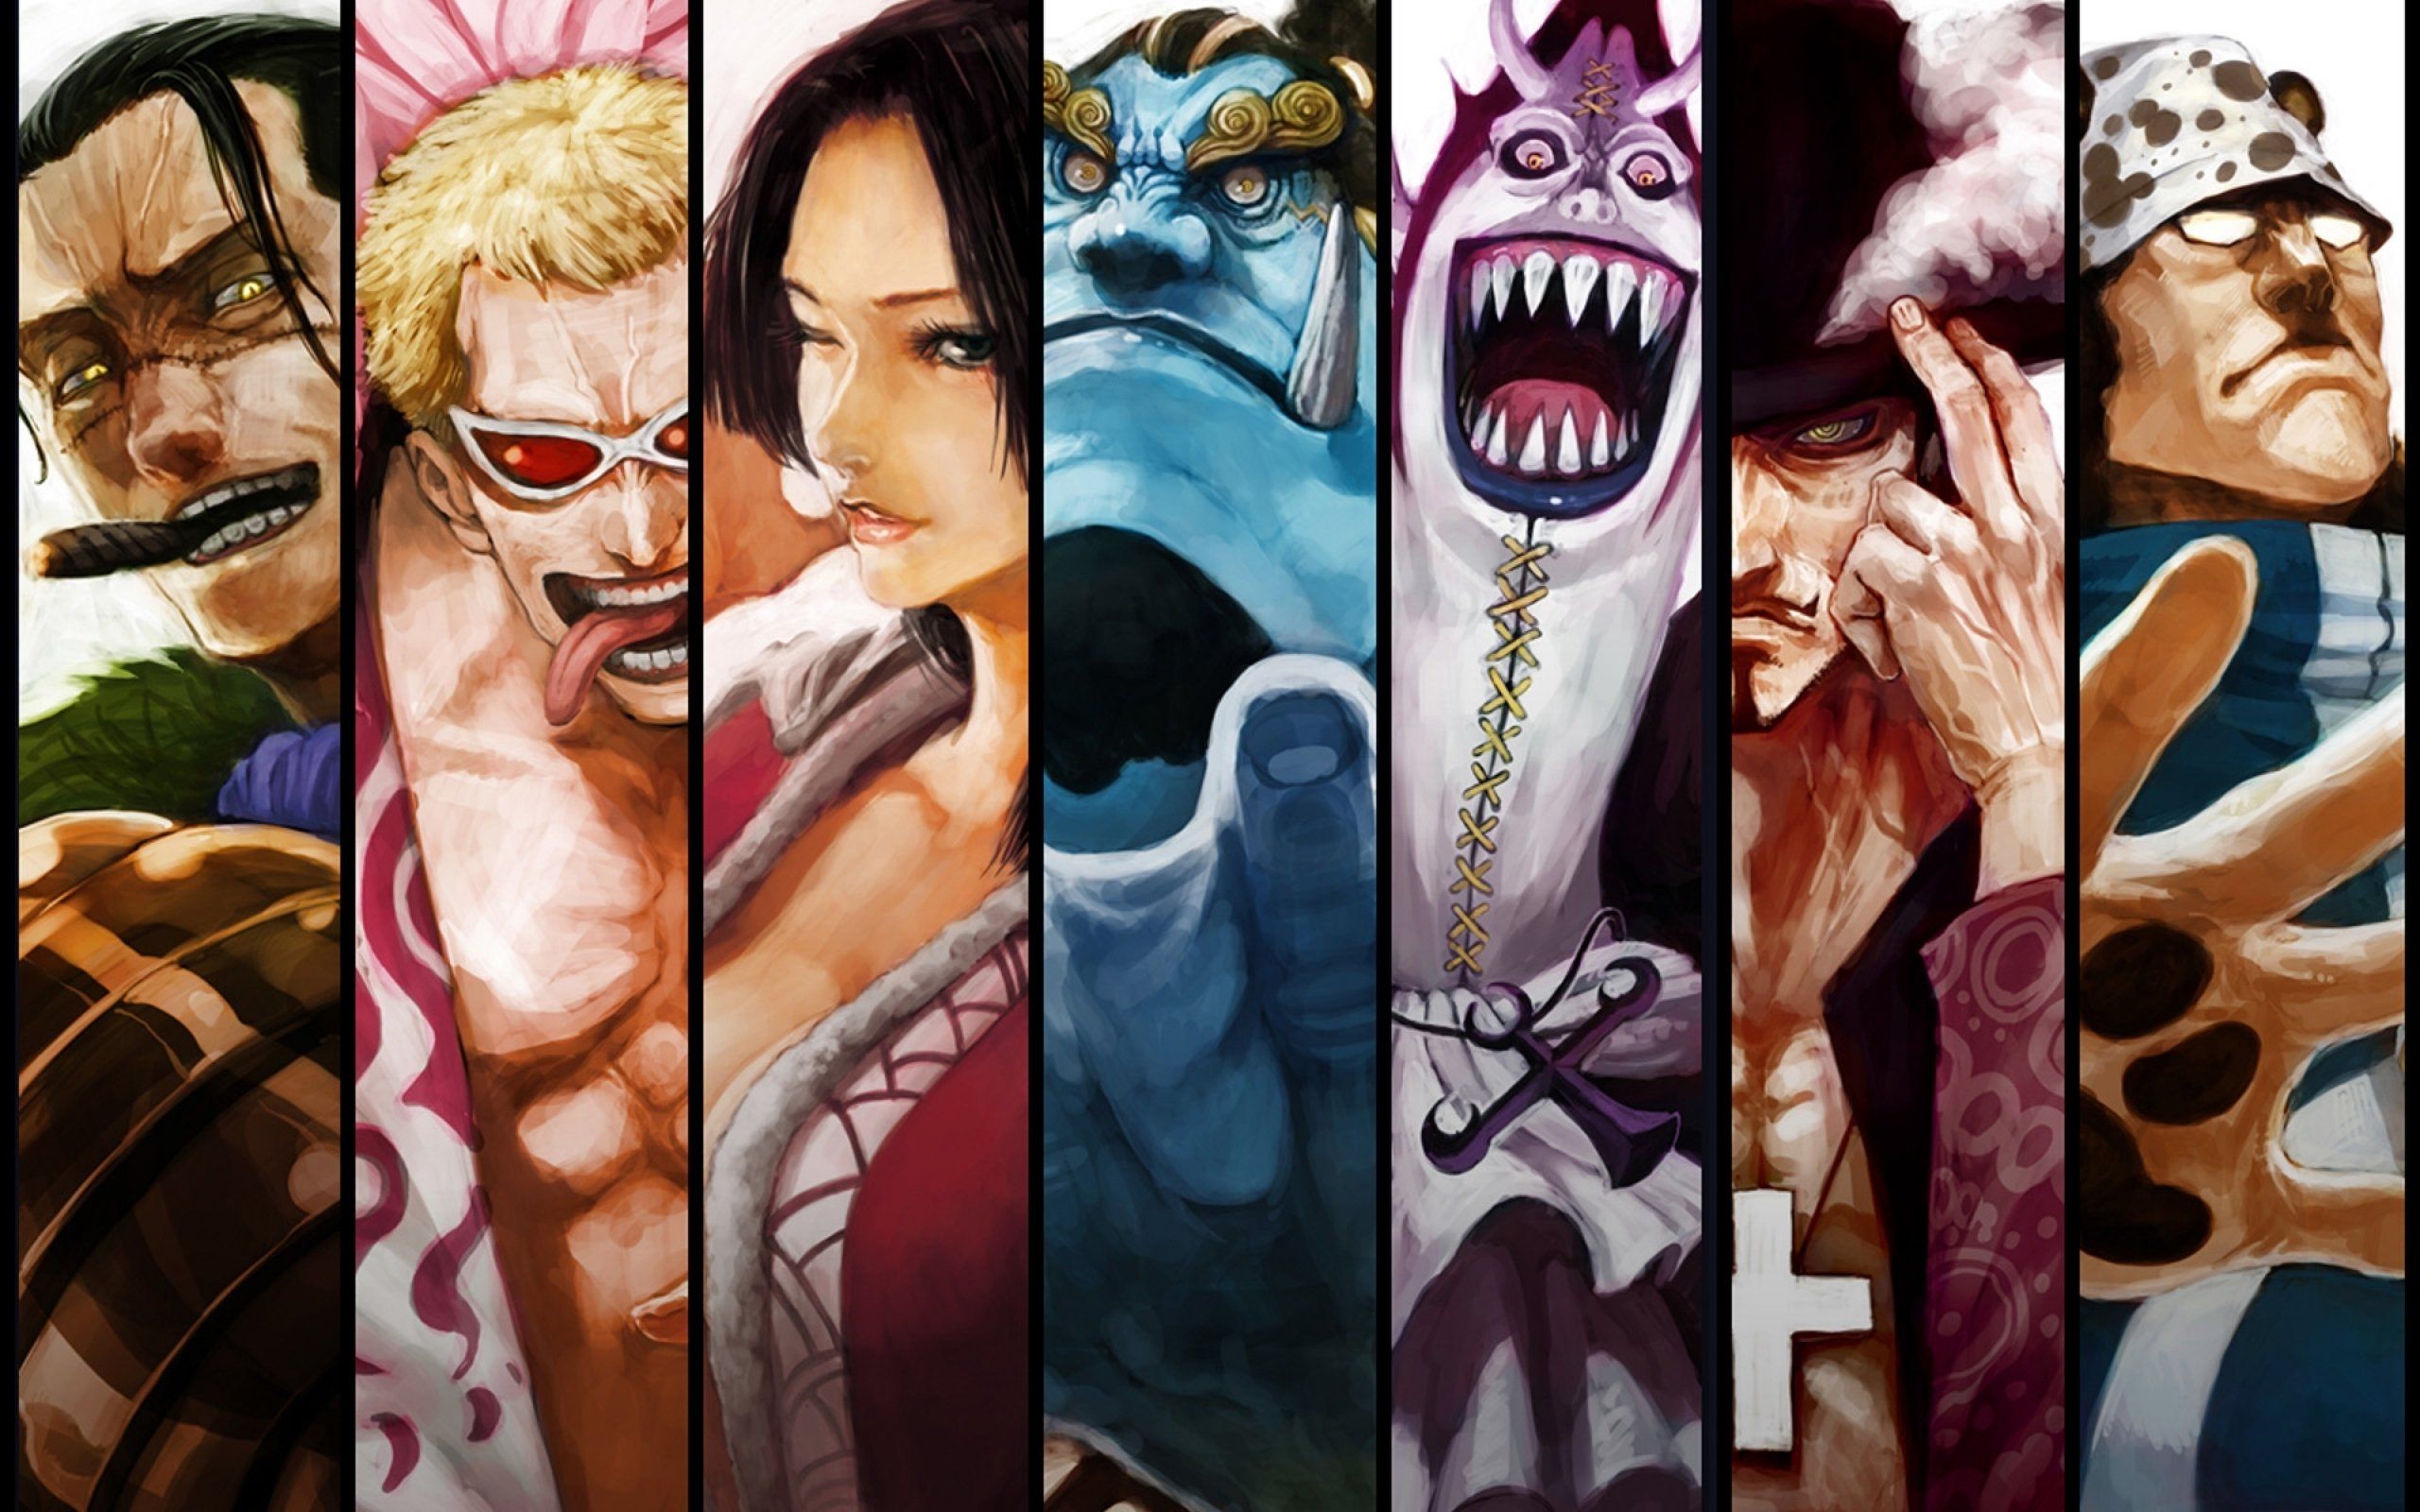 Anime One Piece 4k Ultra HD Wallpaper